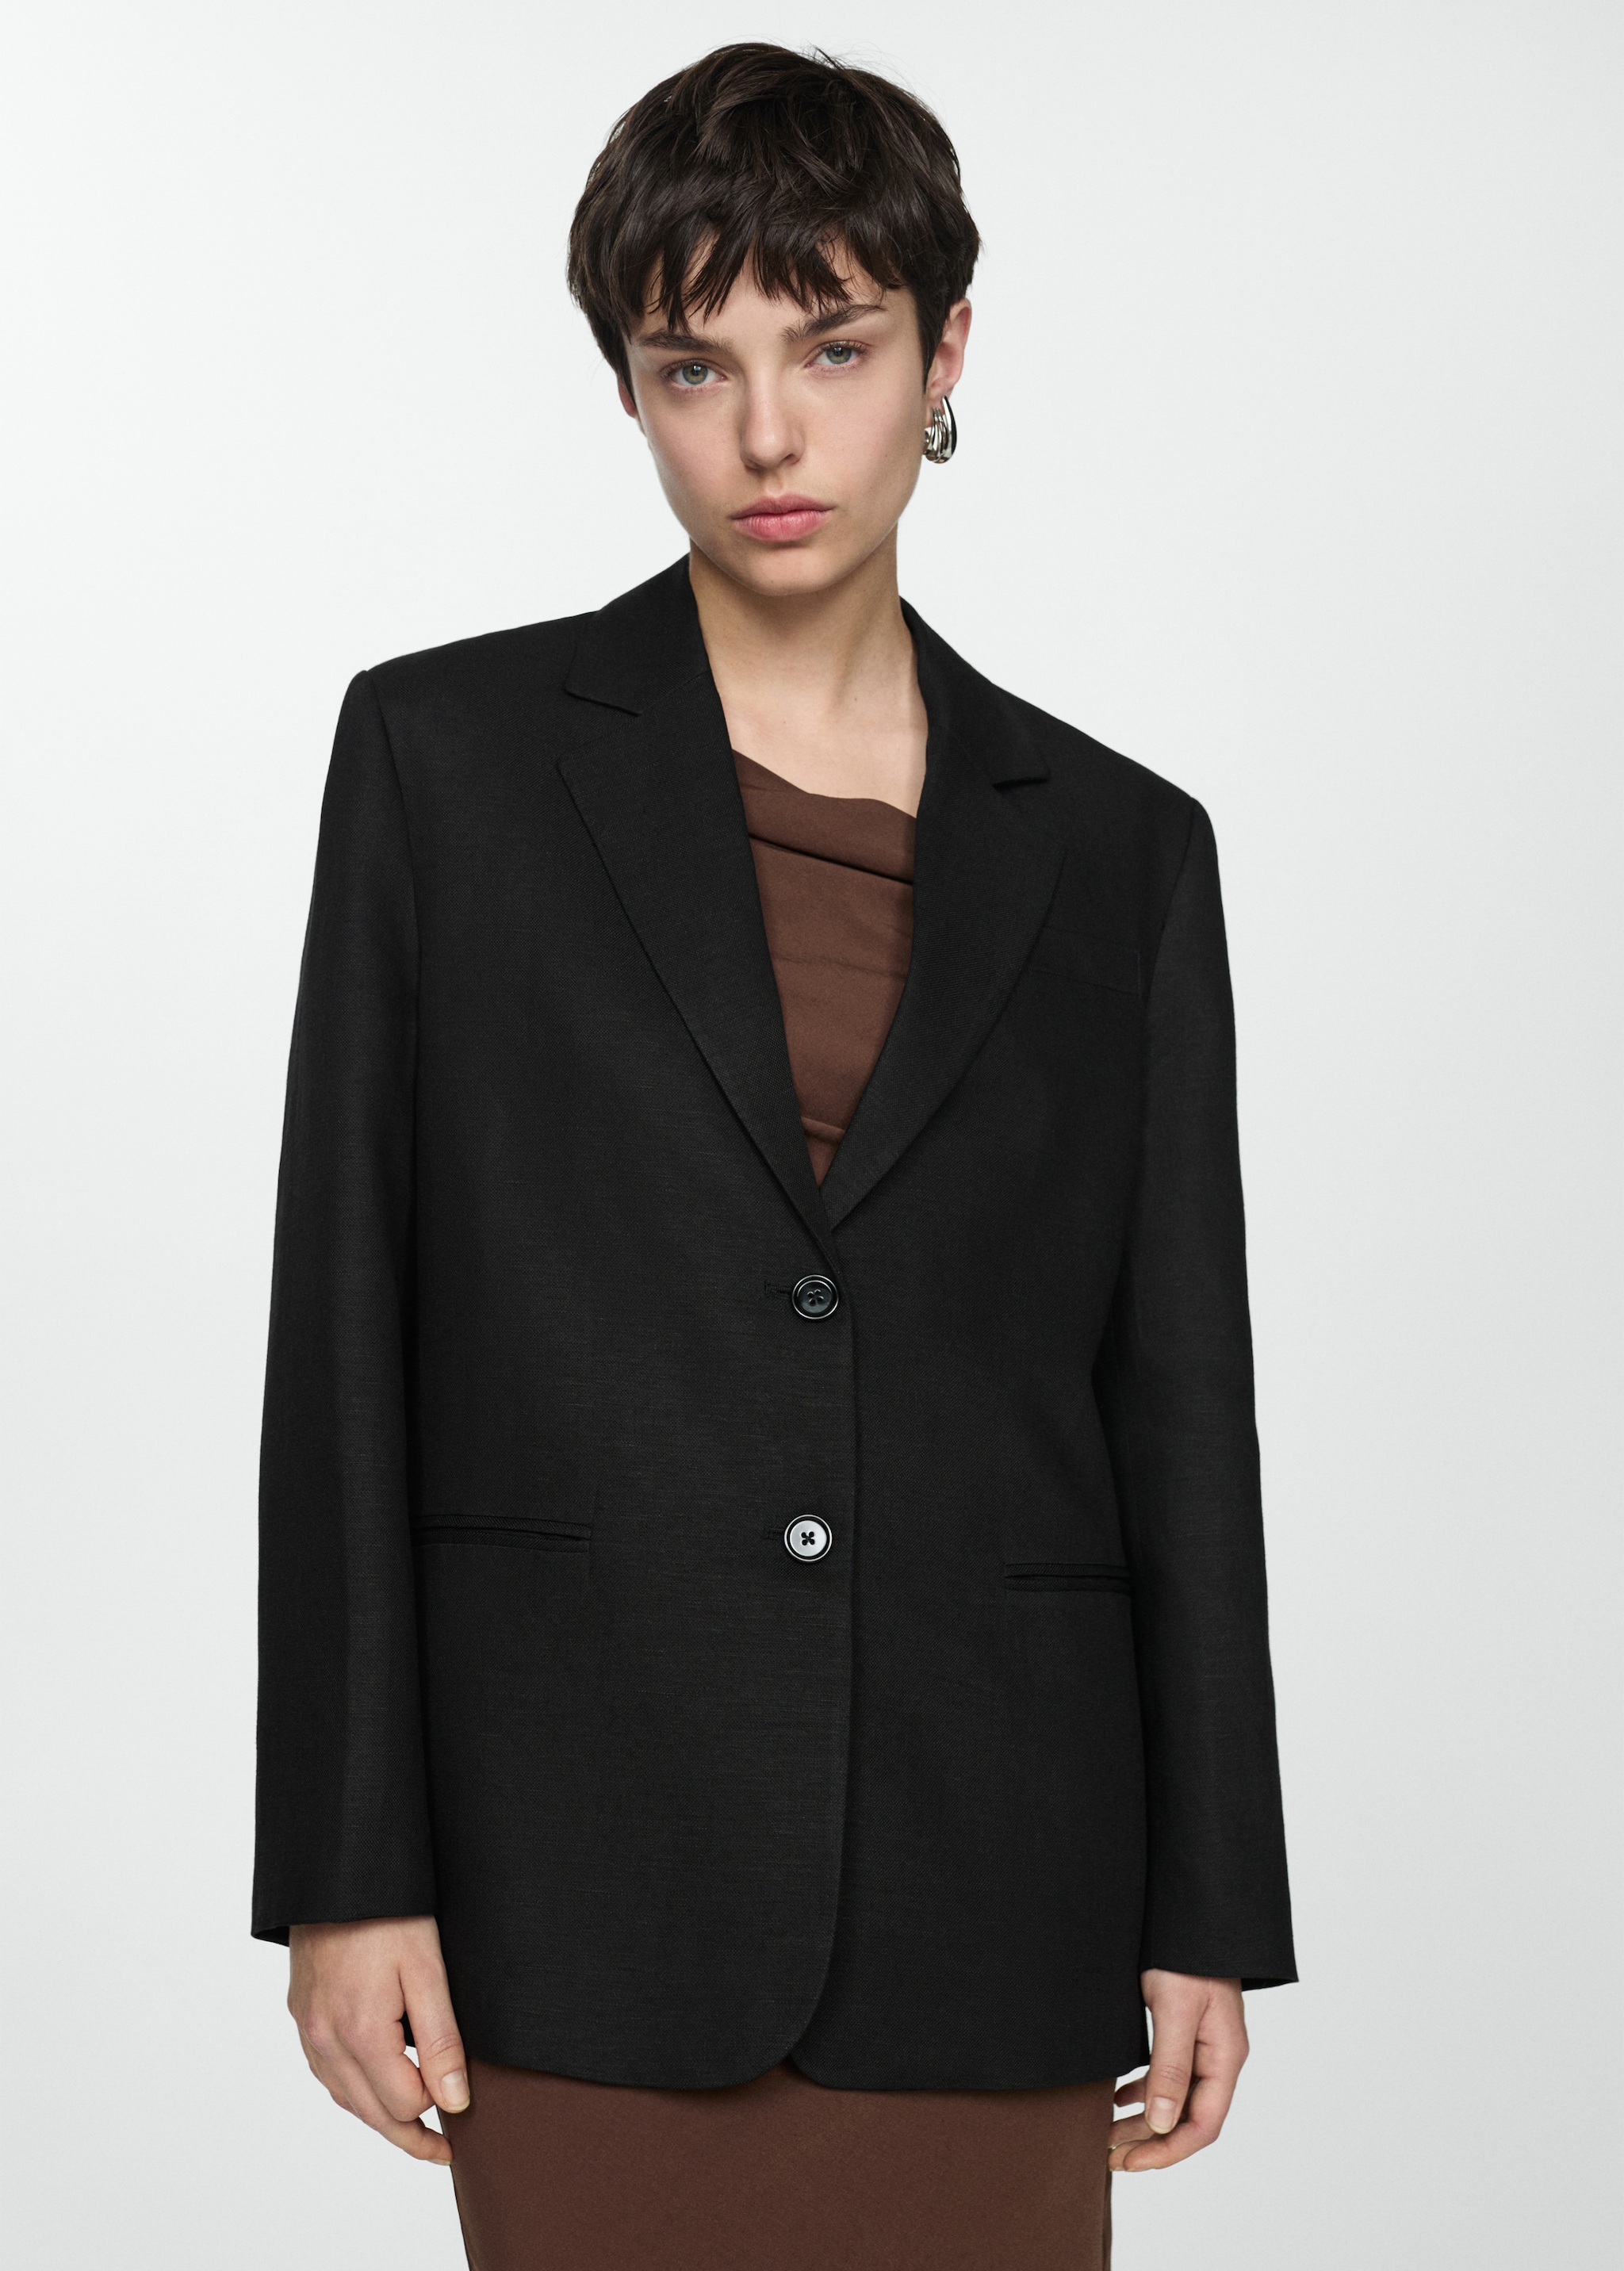 Linen jacket with buttons - Medium plane